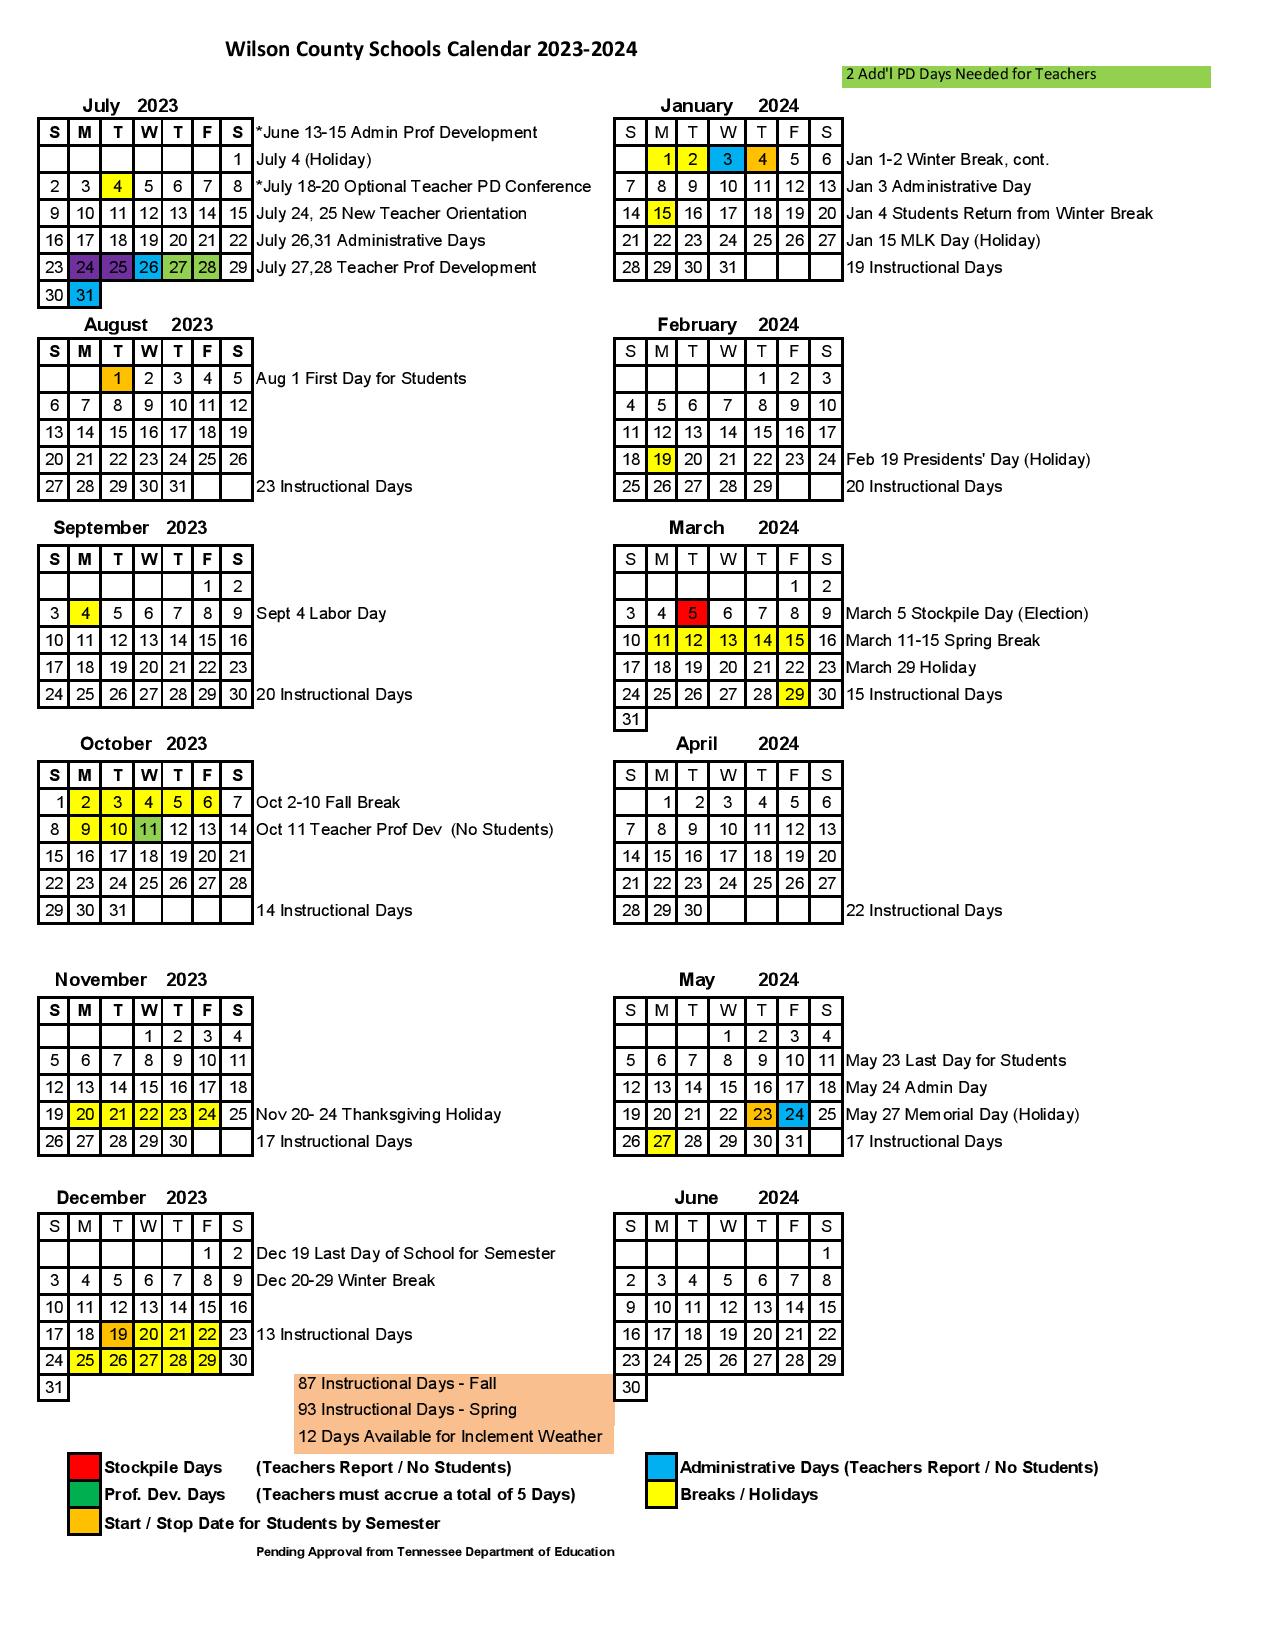 wilson-county-schools-calendar-2024-2025-holiday-breaks